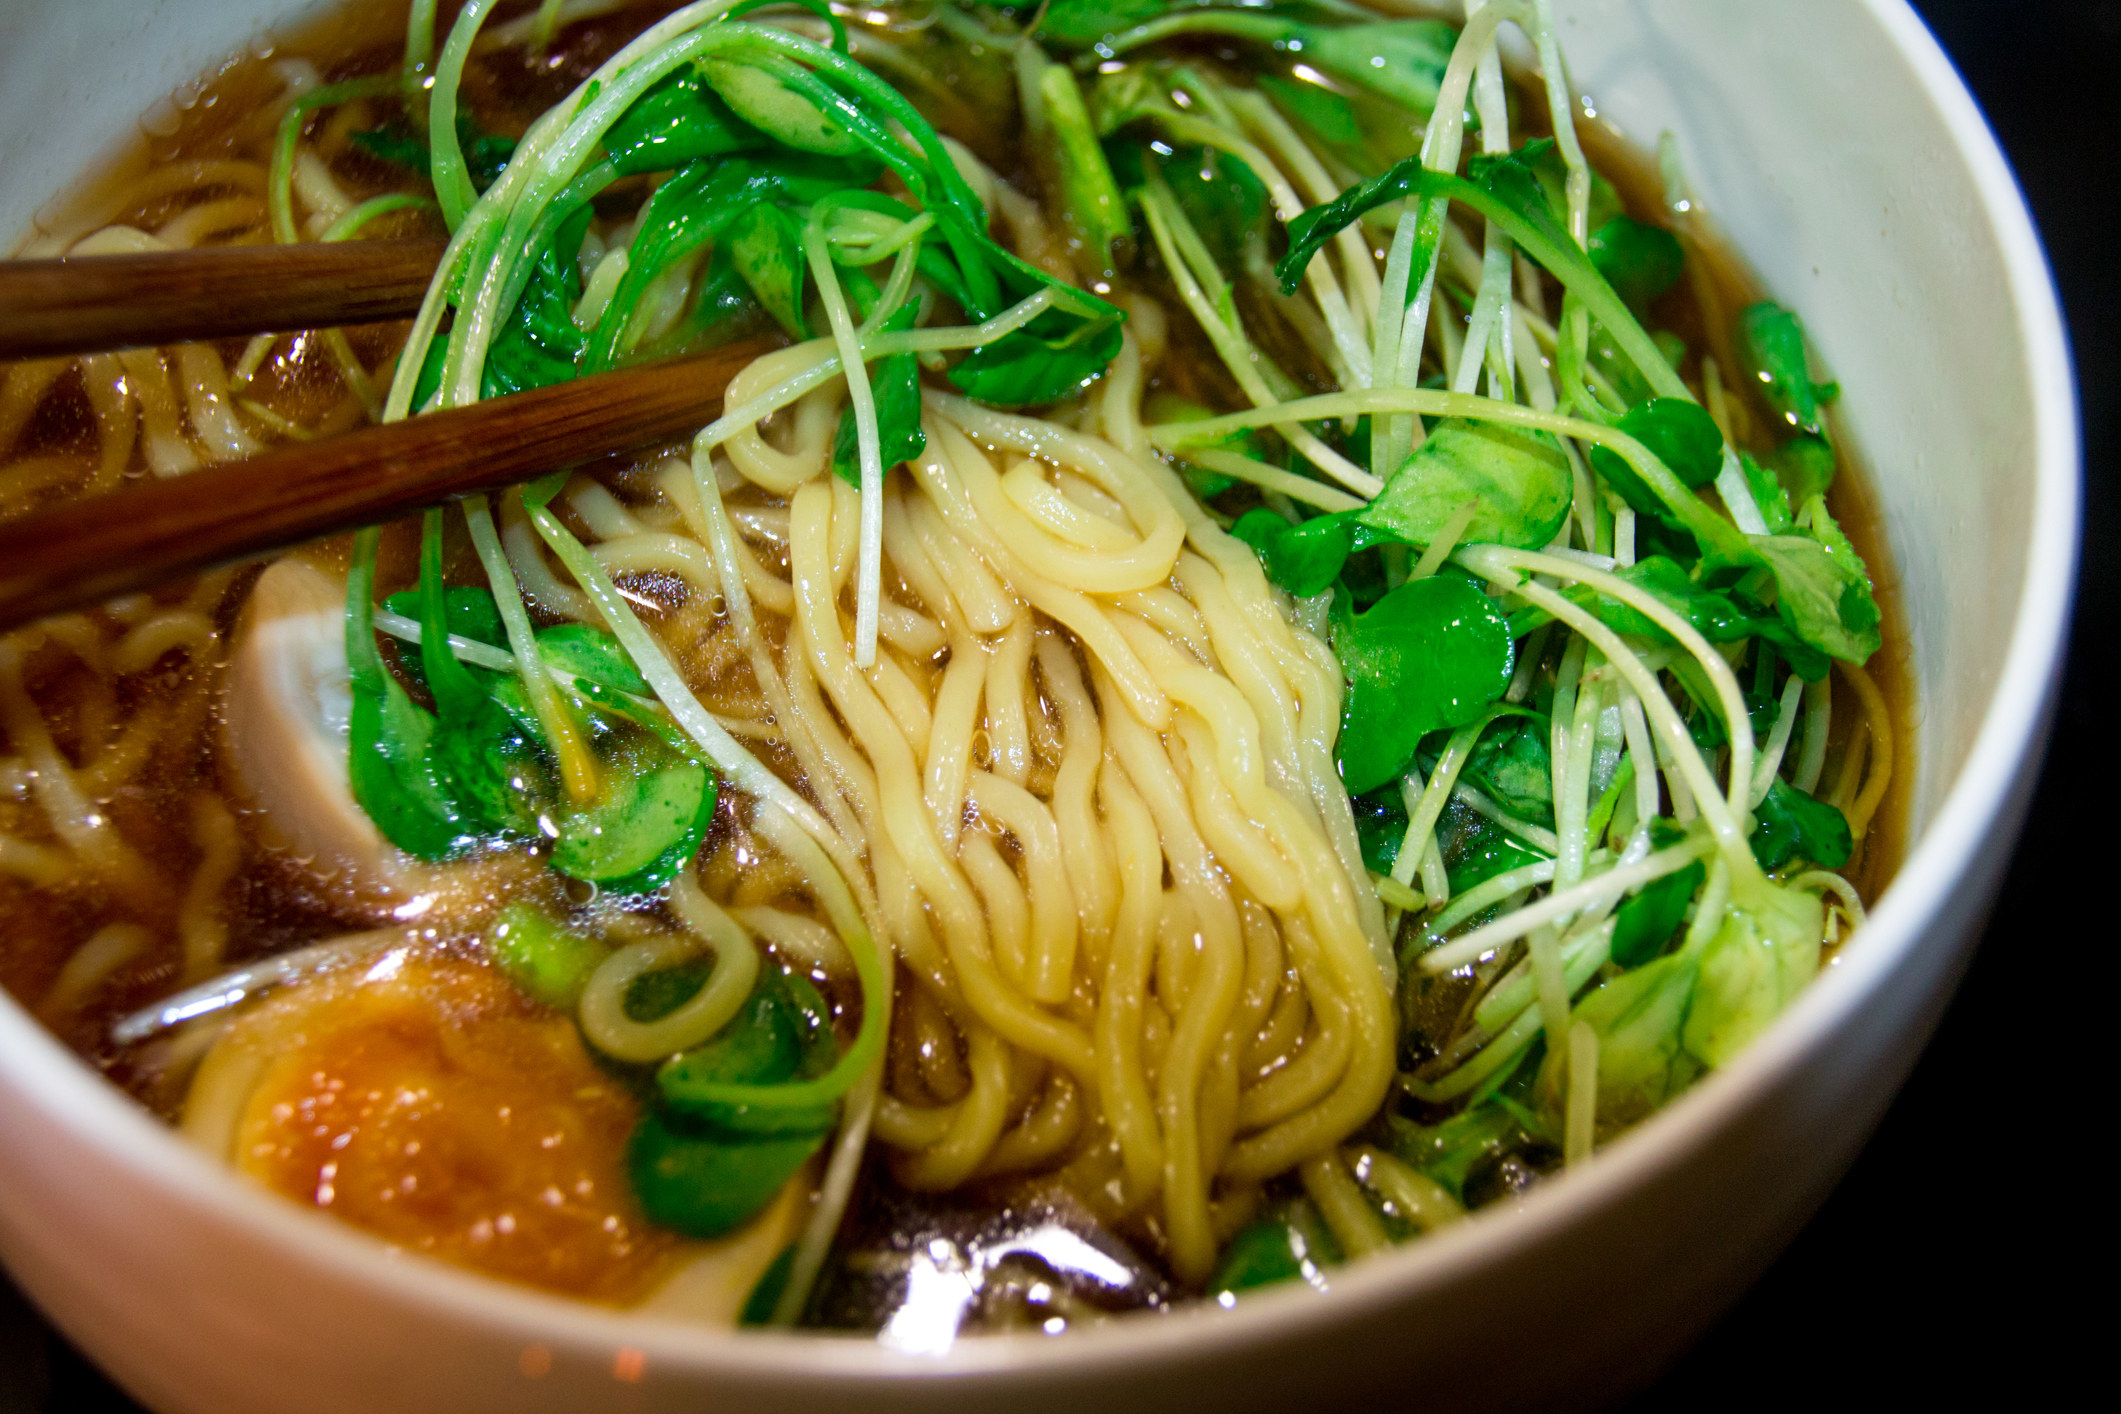 A close-up of a bowl of ramen soup.